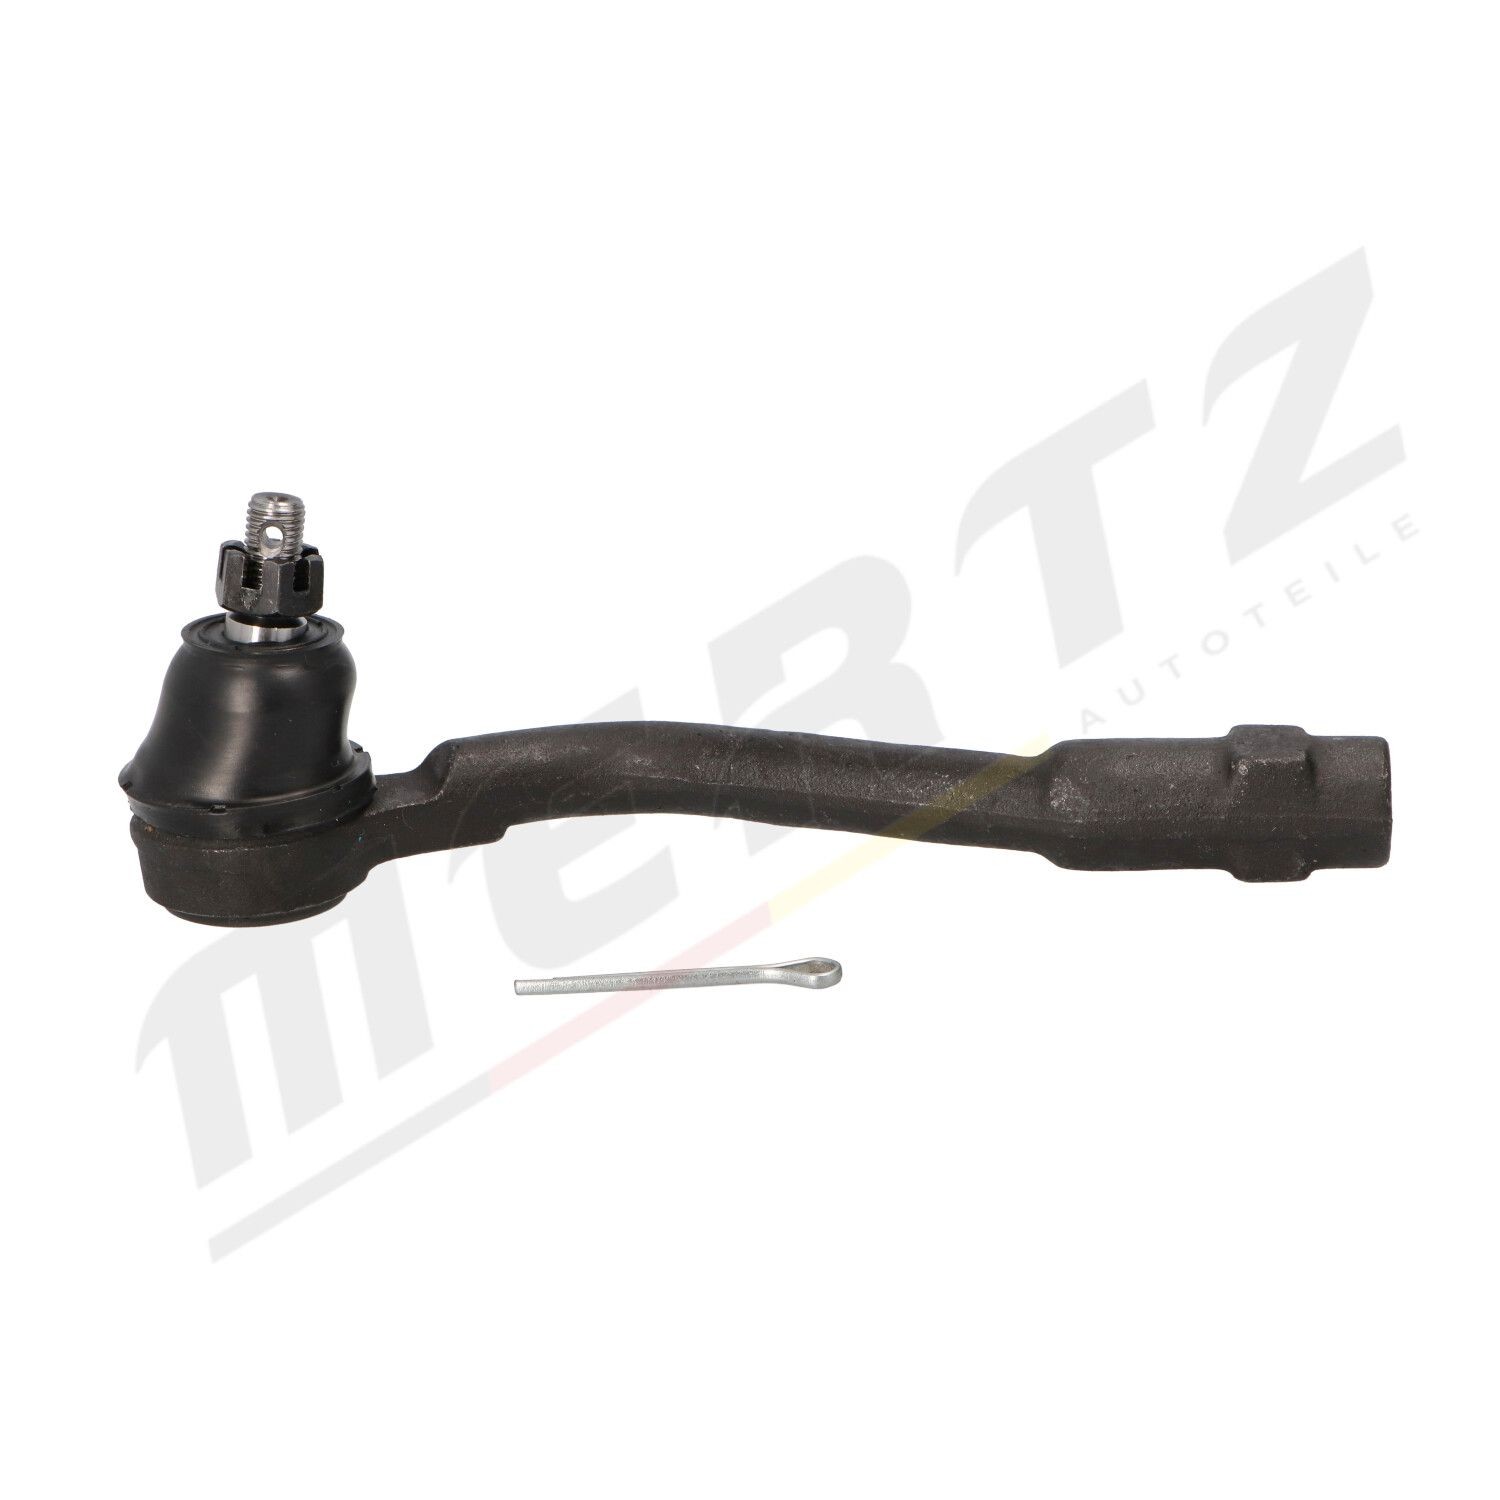 Buy Track rod end MERTZ M-S1391 - Steering system parts HYUNDAI i20 online